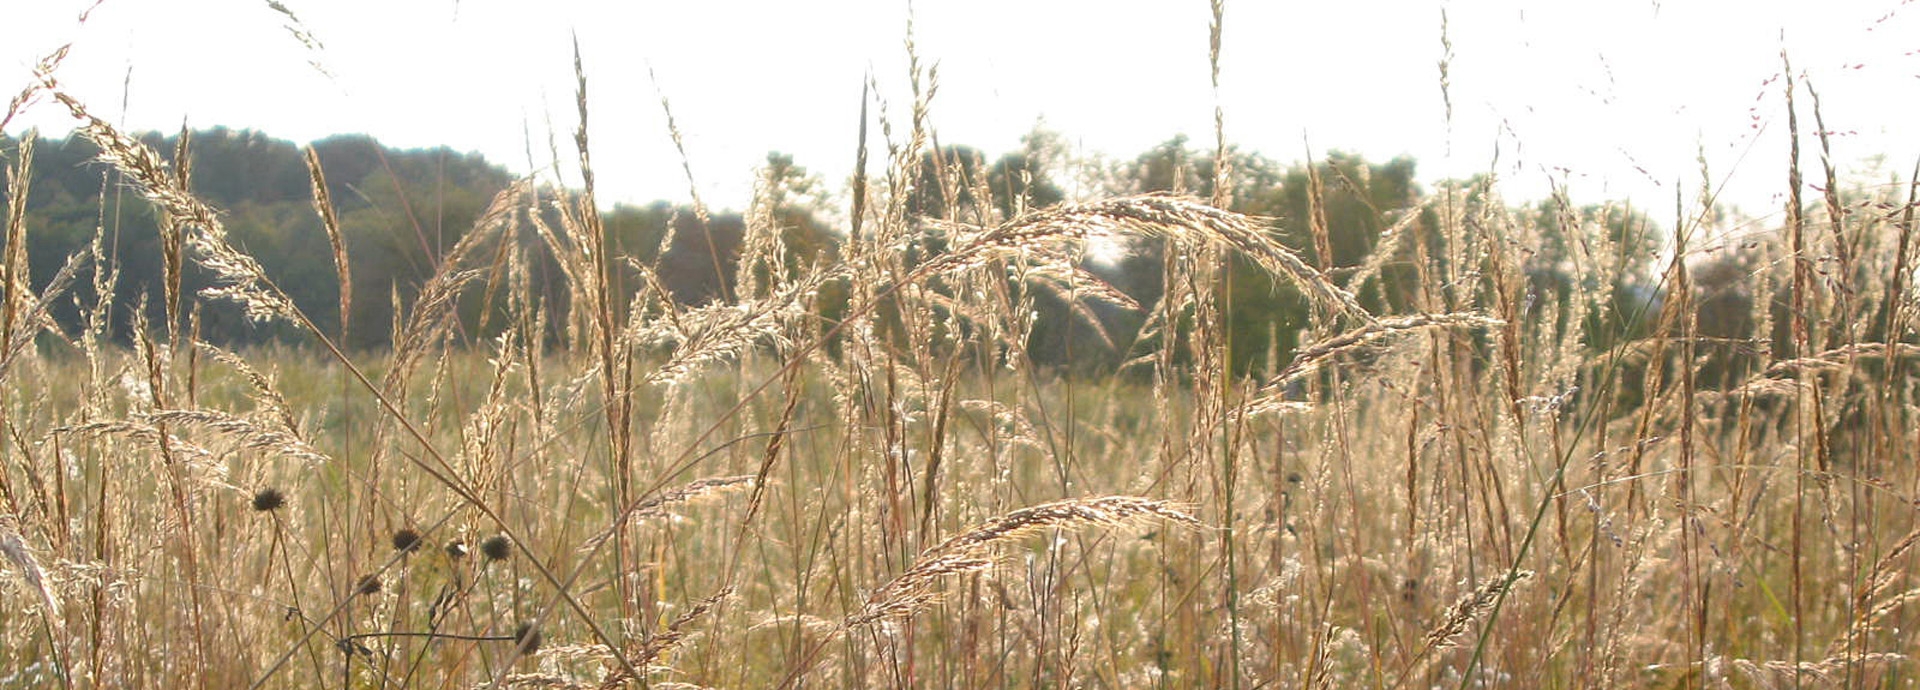 Slideshow Image - A closeup of flowering native grasses